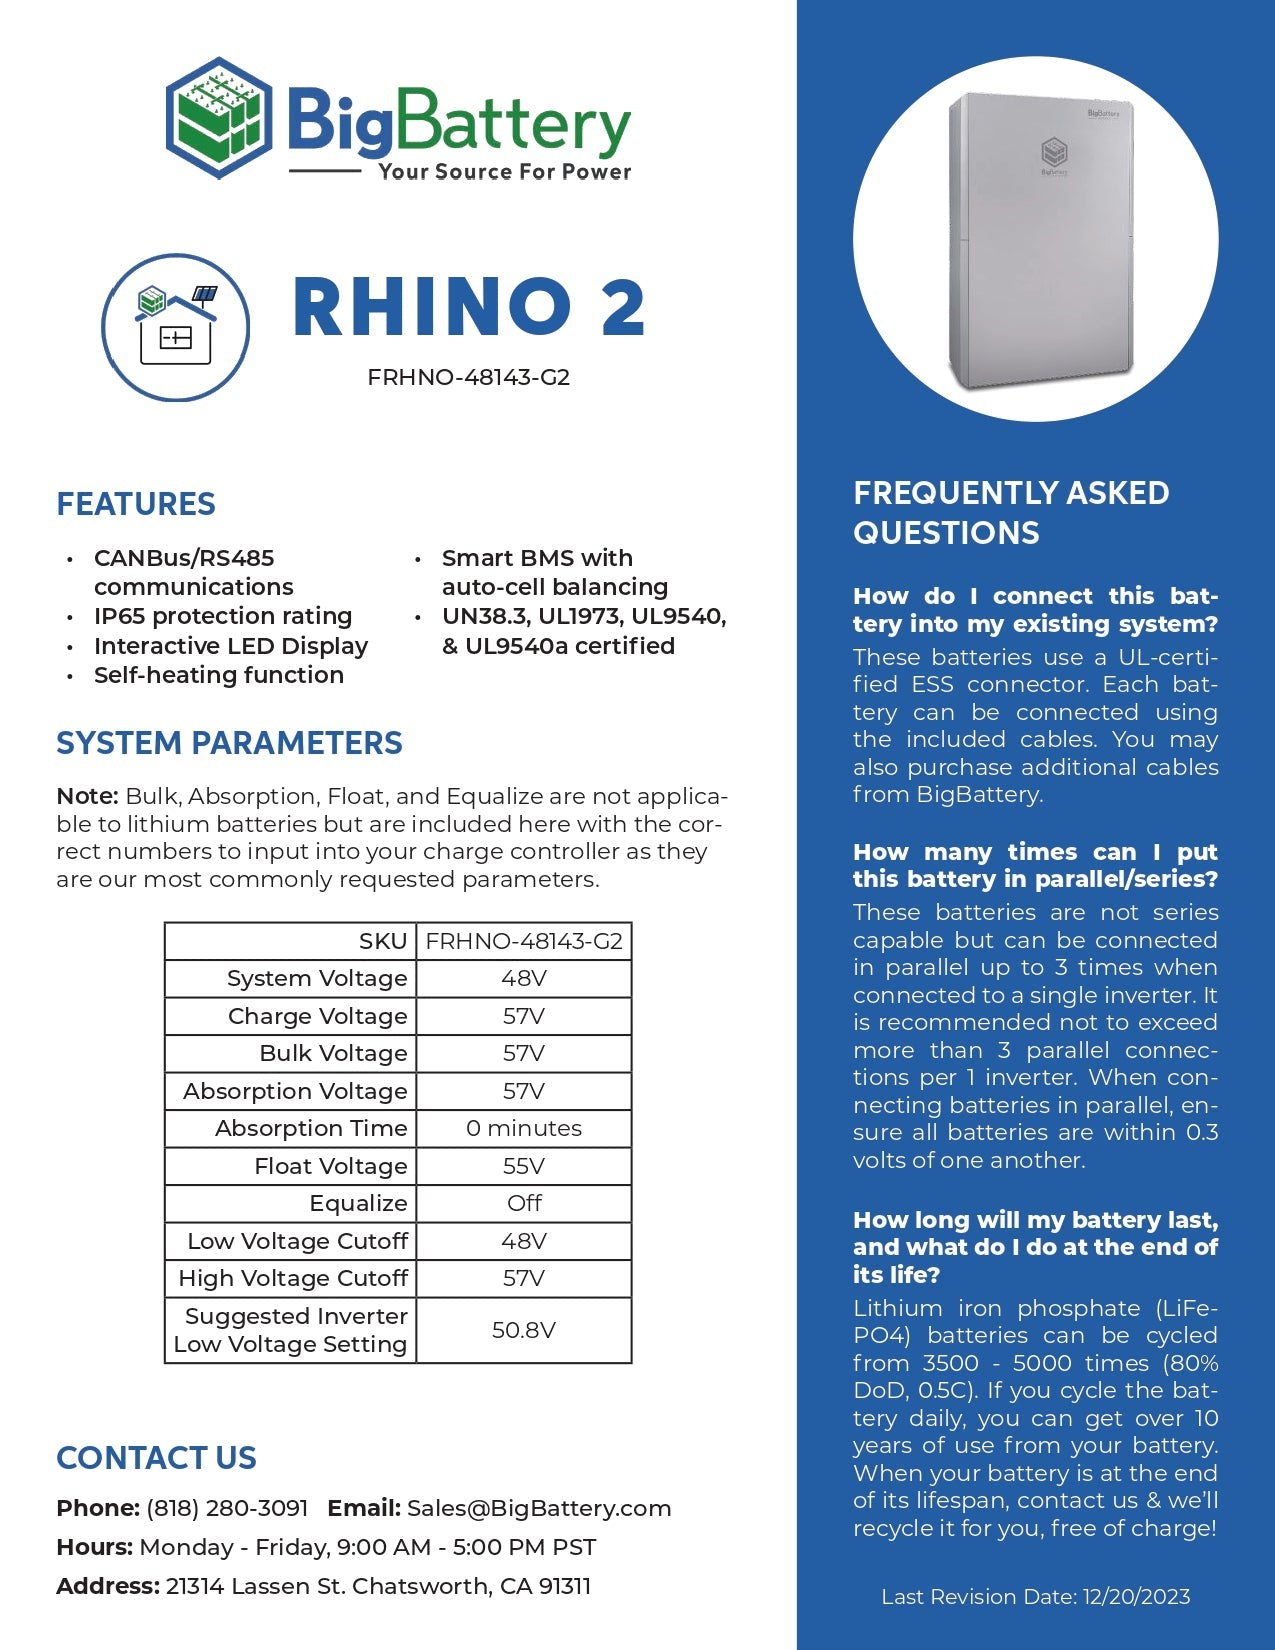 36kW 86kWh Rhino 2 Energy Storage System (ESS)